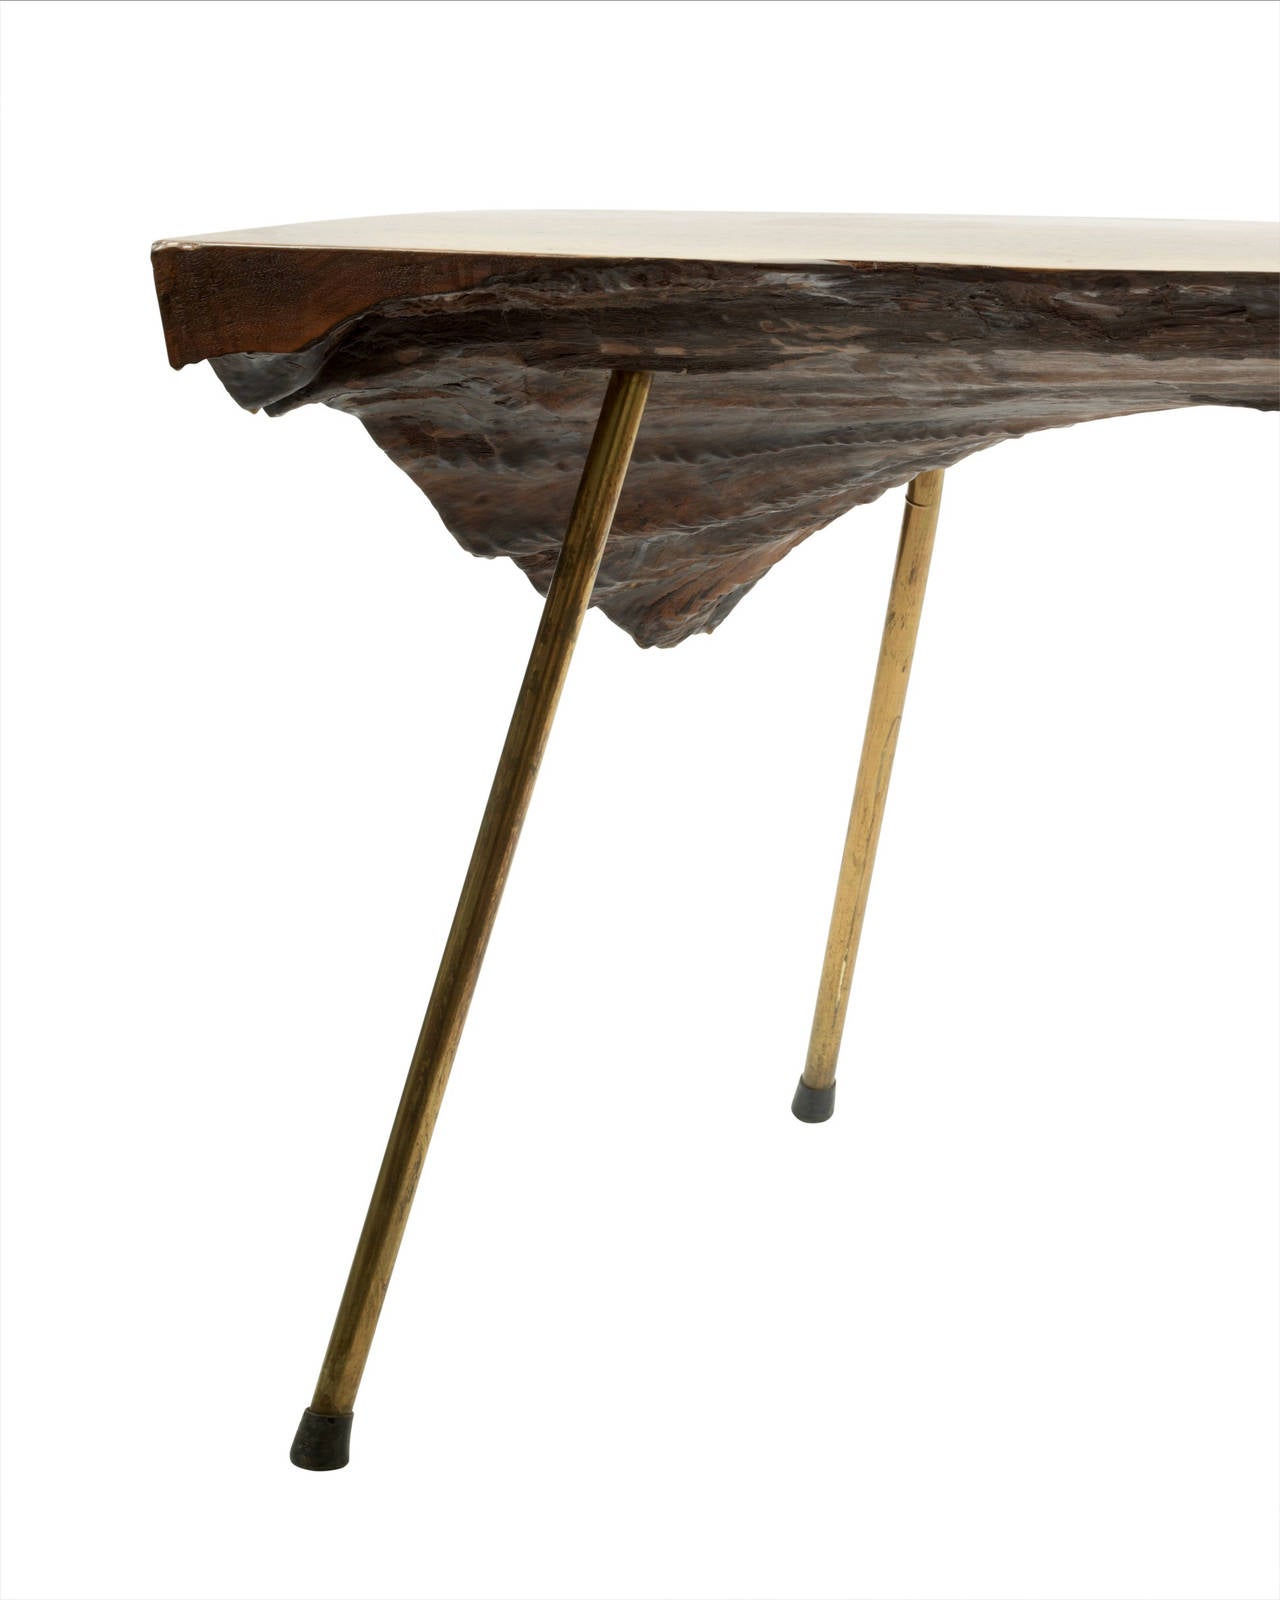 A solid walnut coffee table raised on three brass legs